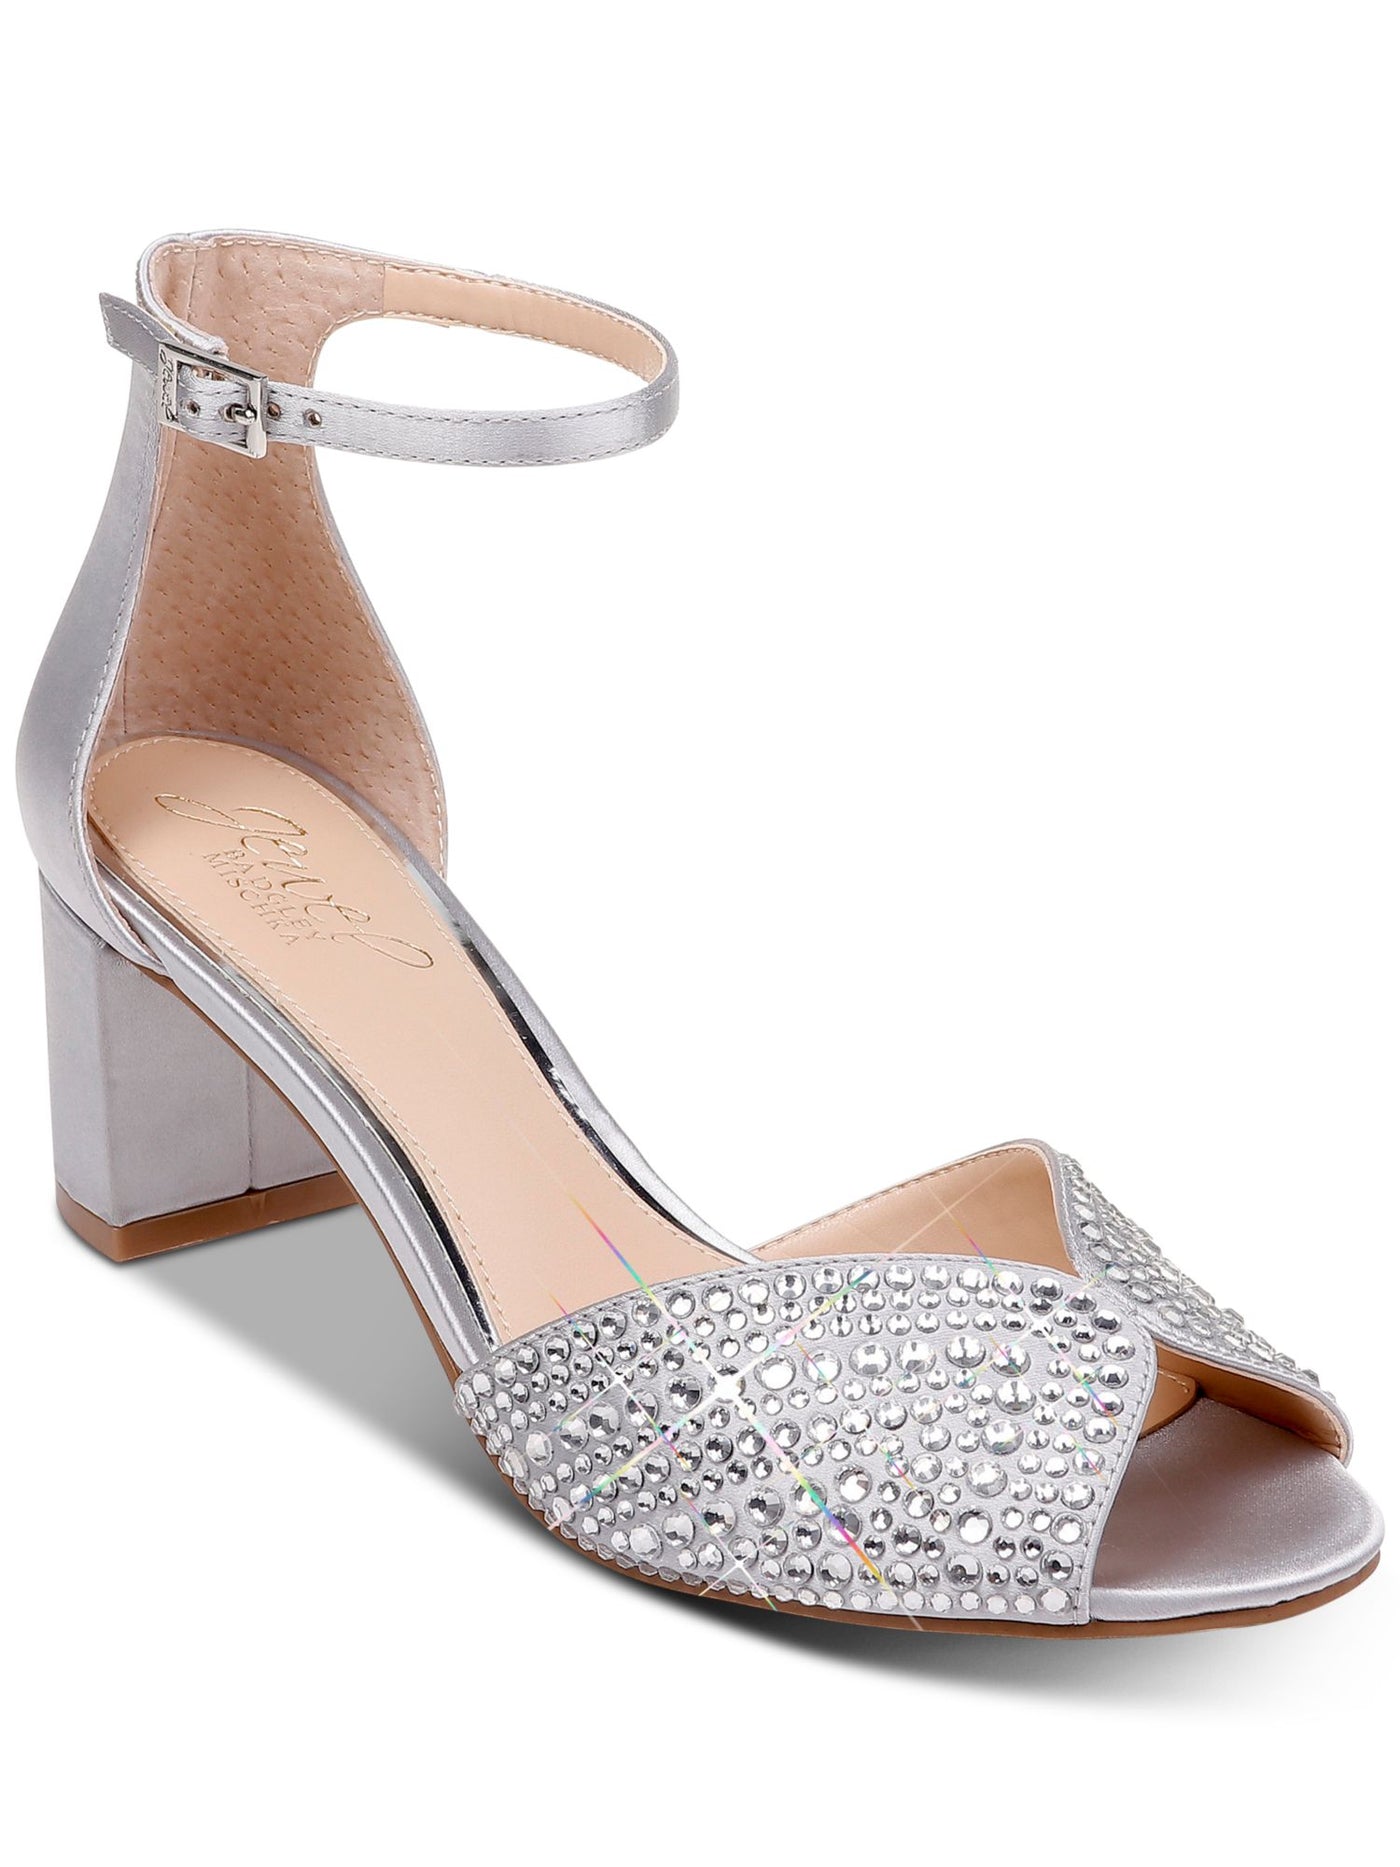 BADGLEY MISCHKA Womens Silver Rhinestone Ankle Strap Sycamore Round Toe Block Heel Buckle Dress Sandals Shoes 6 M